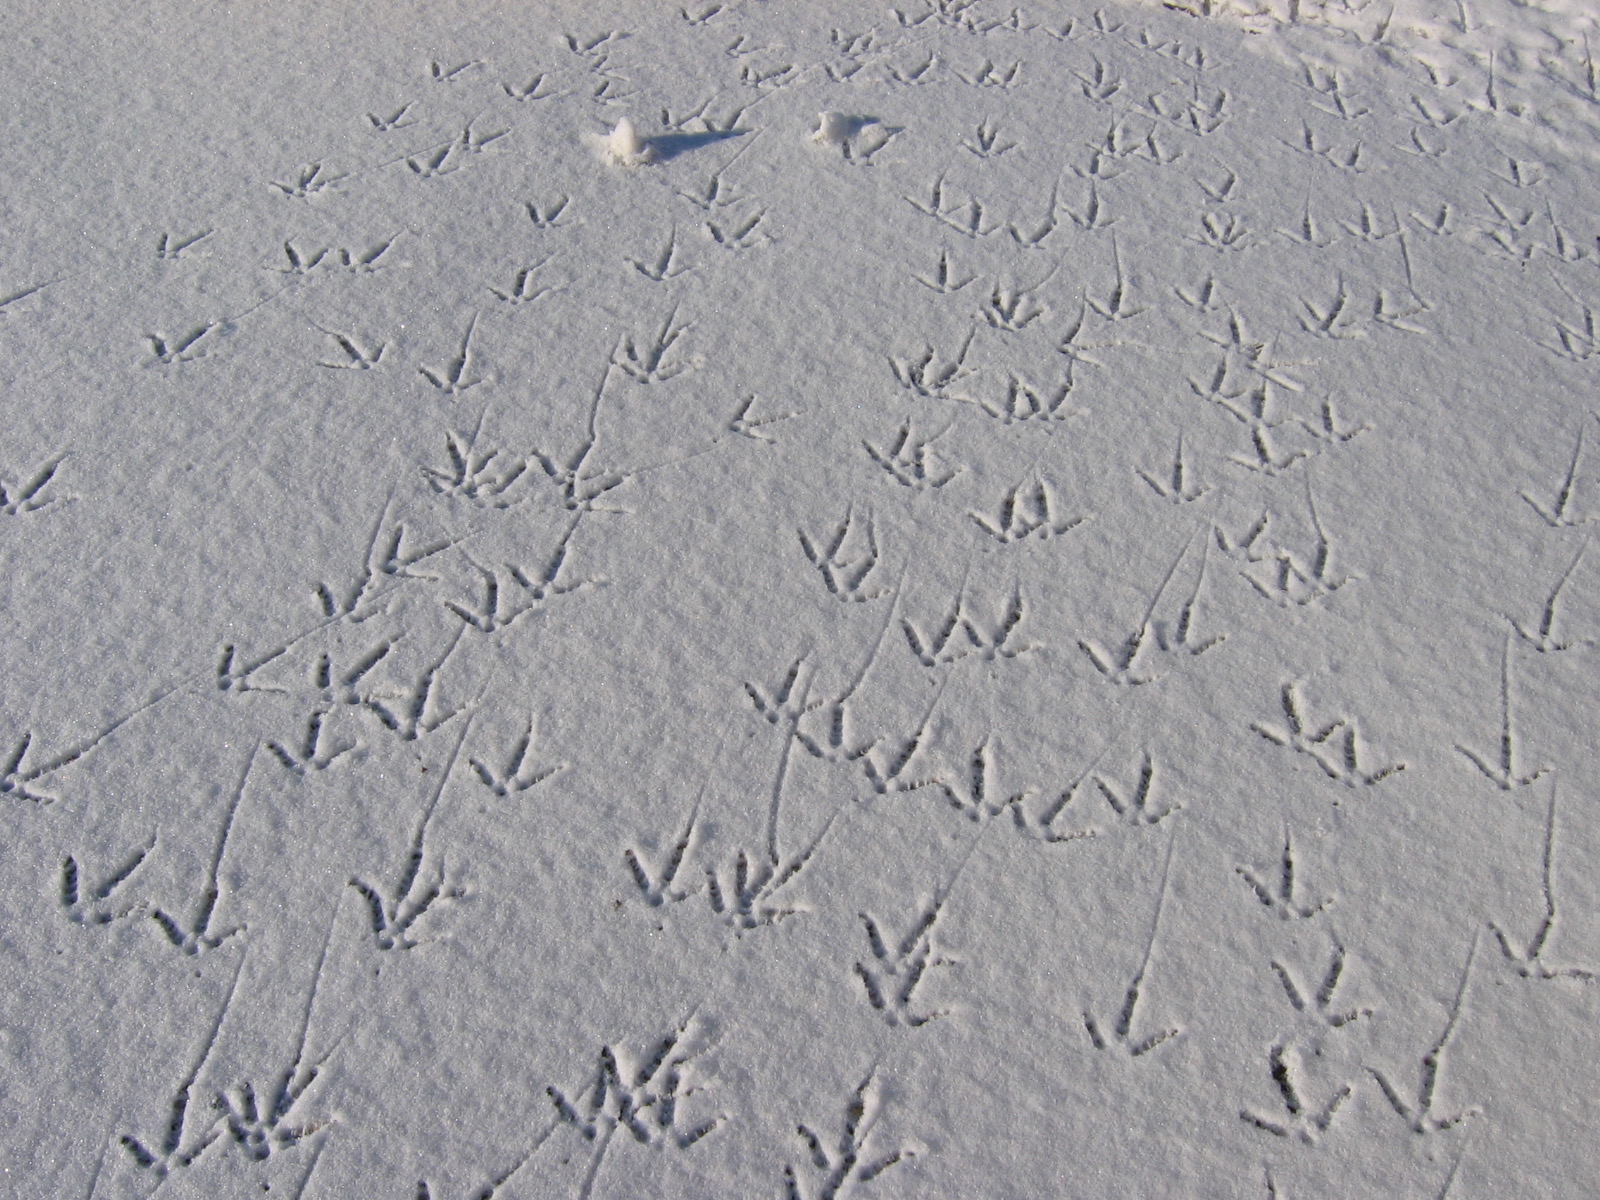 Turkey tracks in the snow